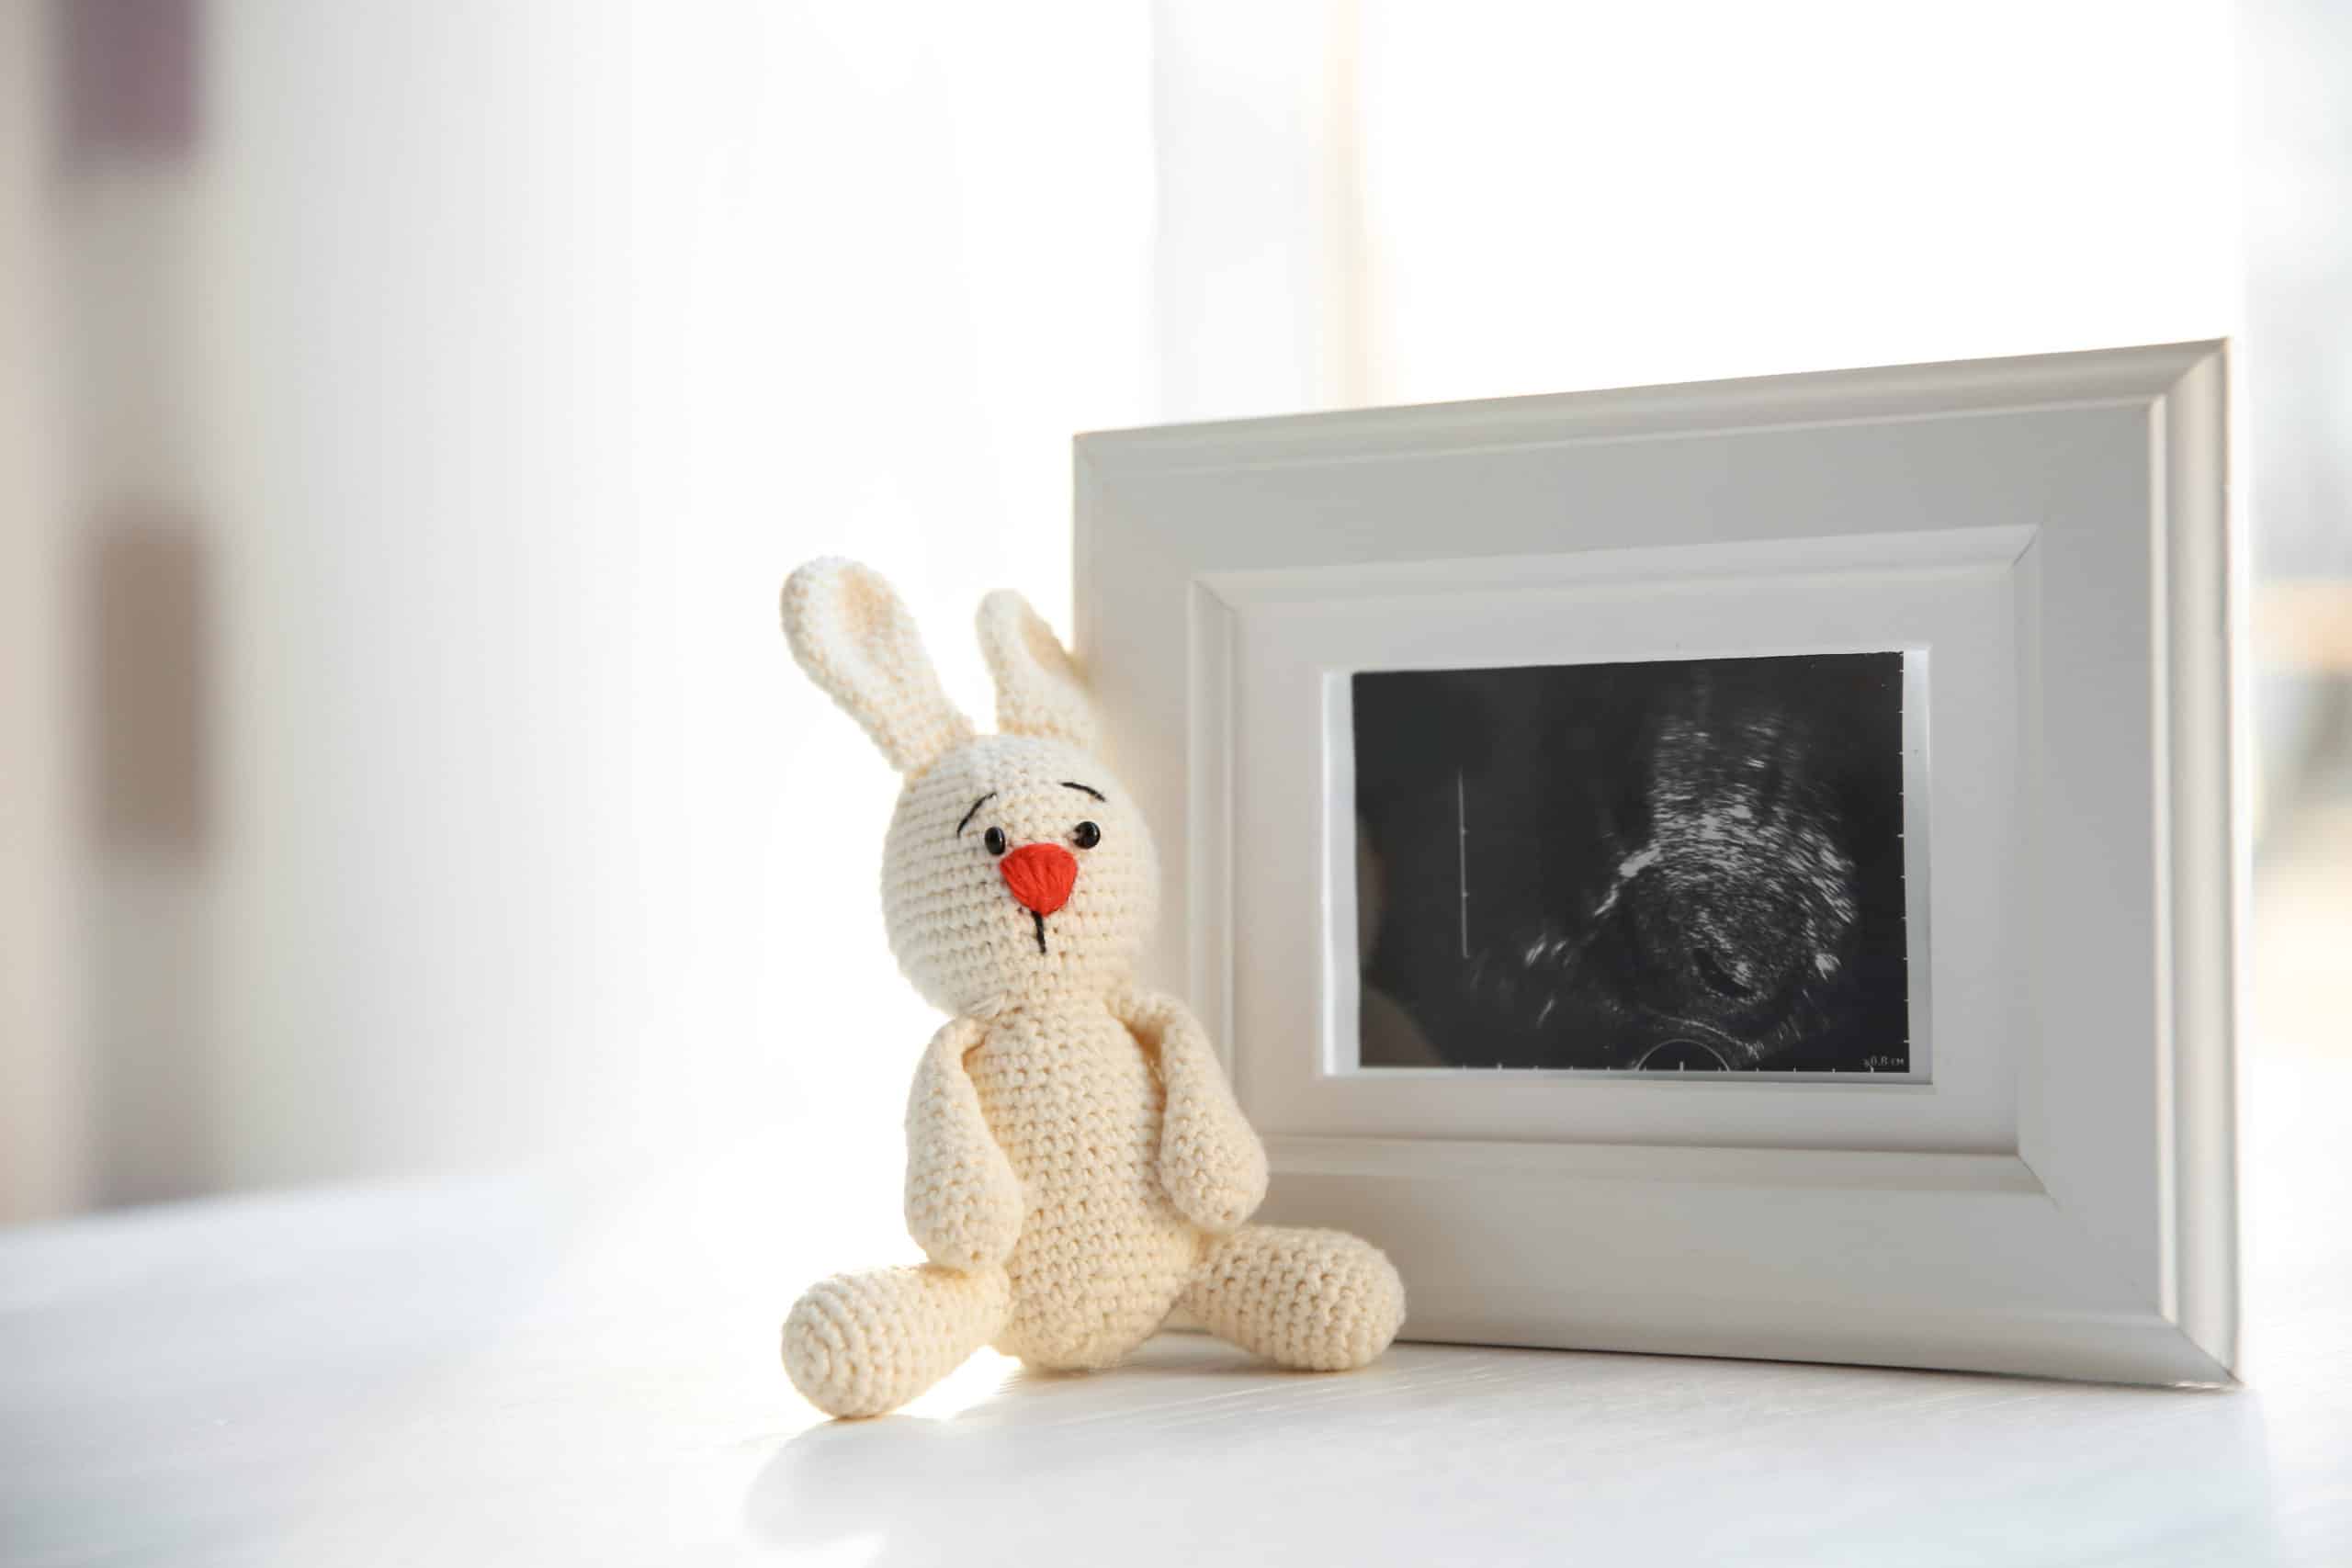 Ultrasound photo and bunny bear